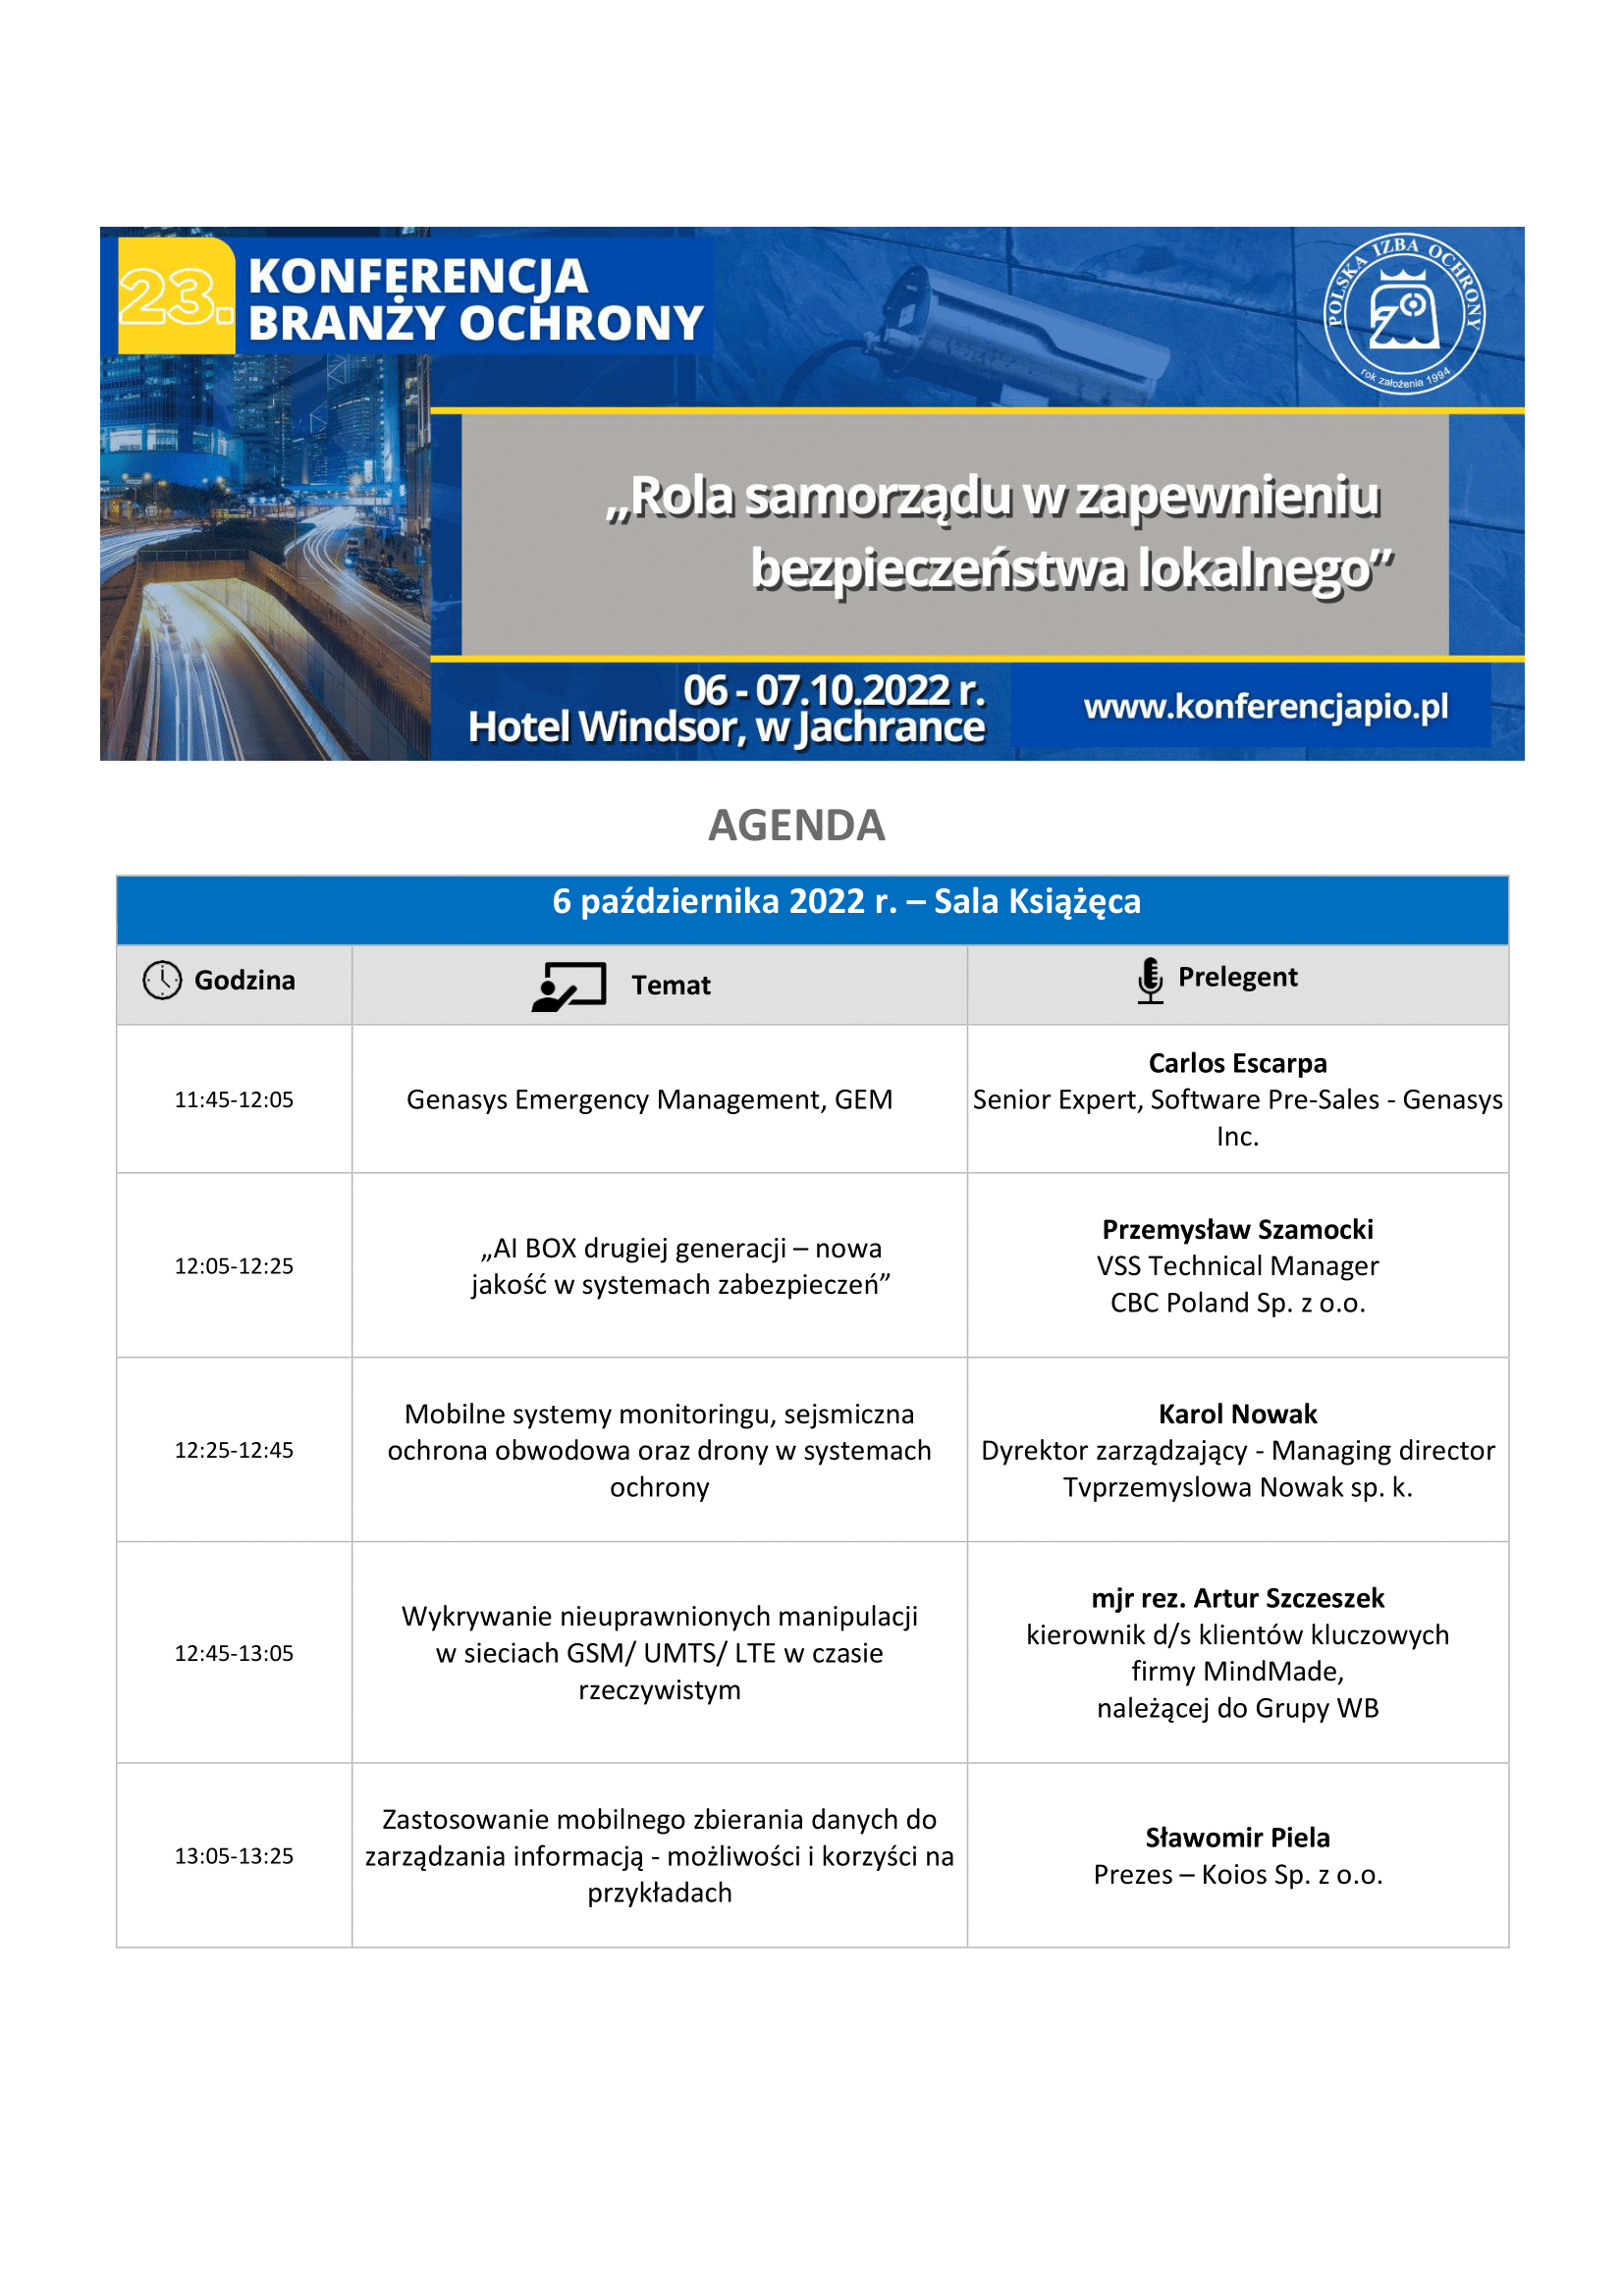 Agenda - 23. Konferencja Branży Ochrony